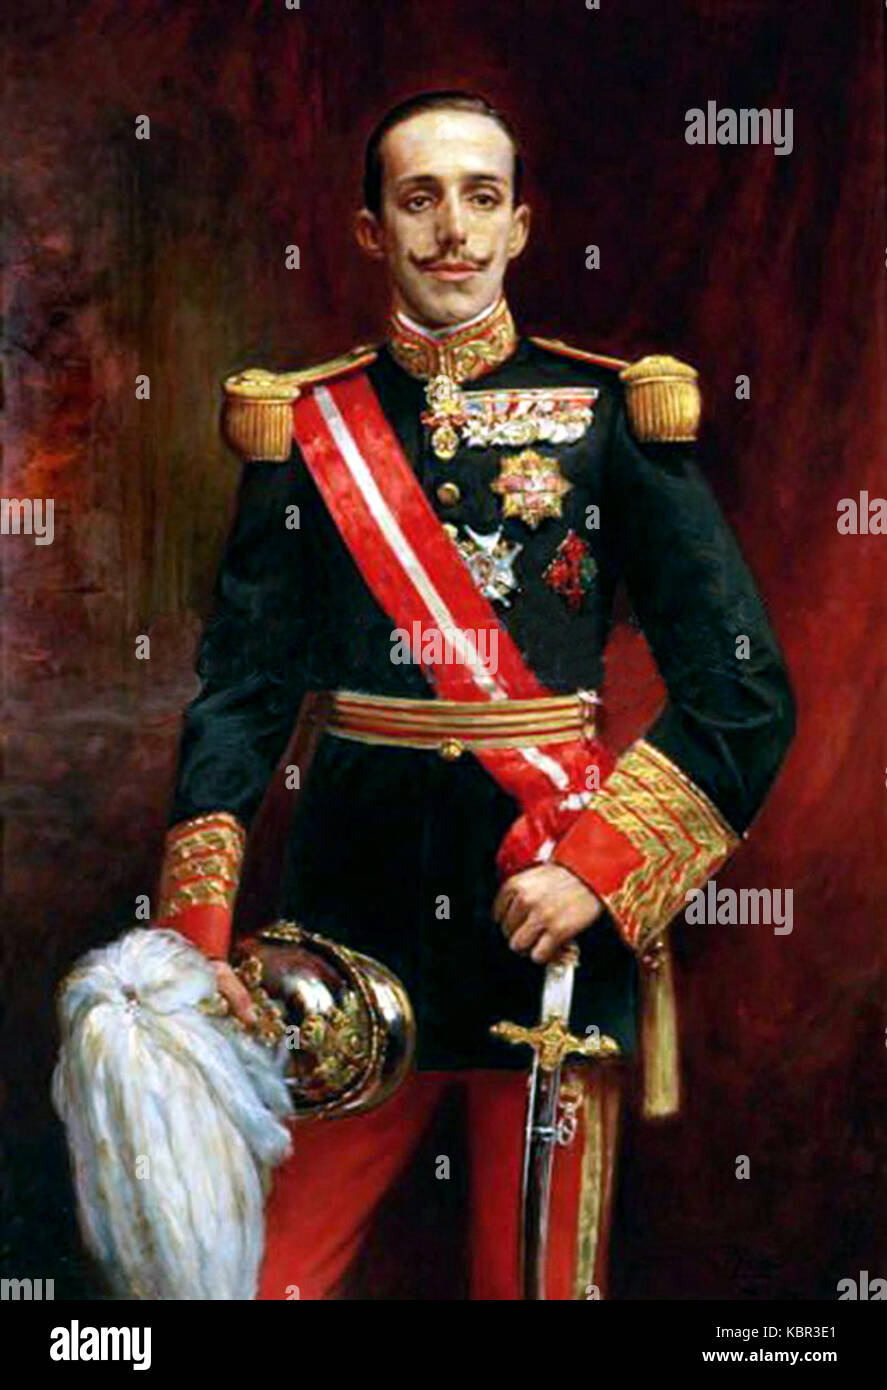 Retrato de Alfonso XIII (Real Academia de la Historia) Stock Photo